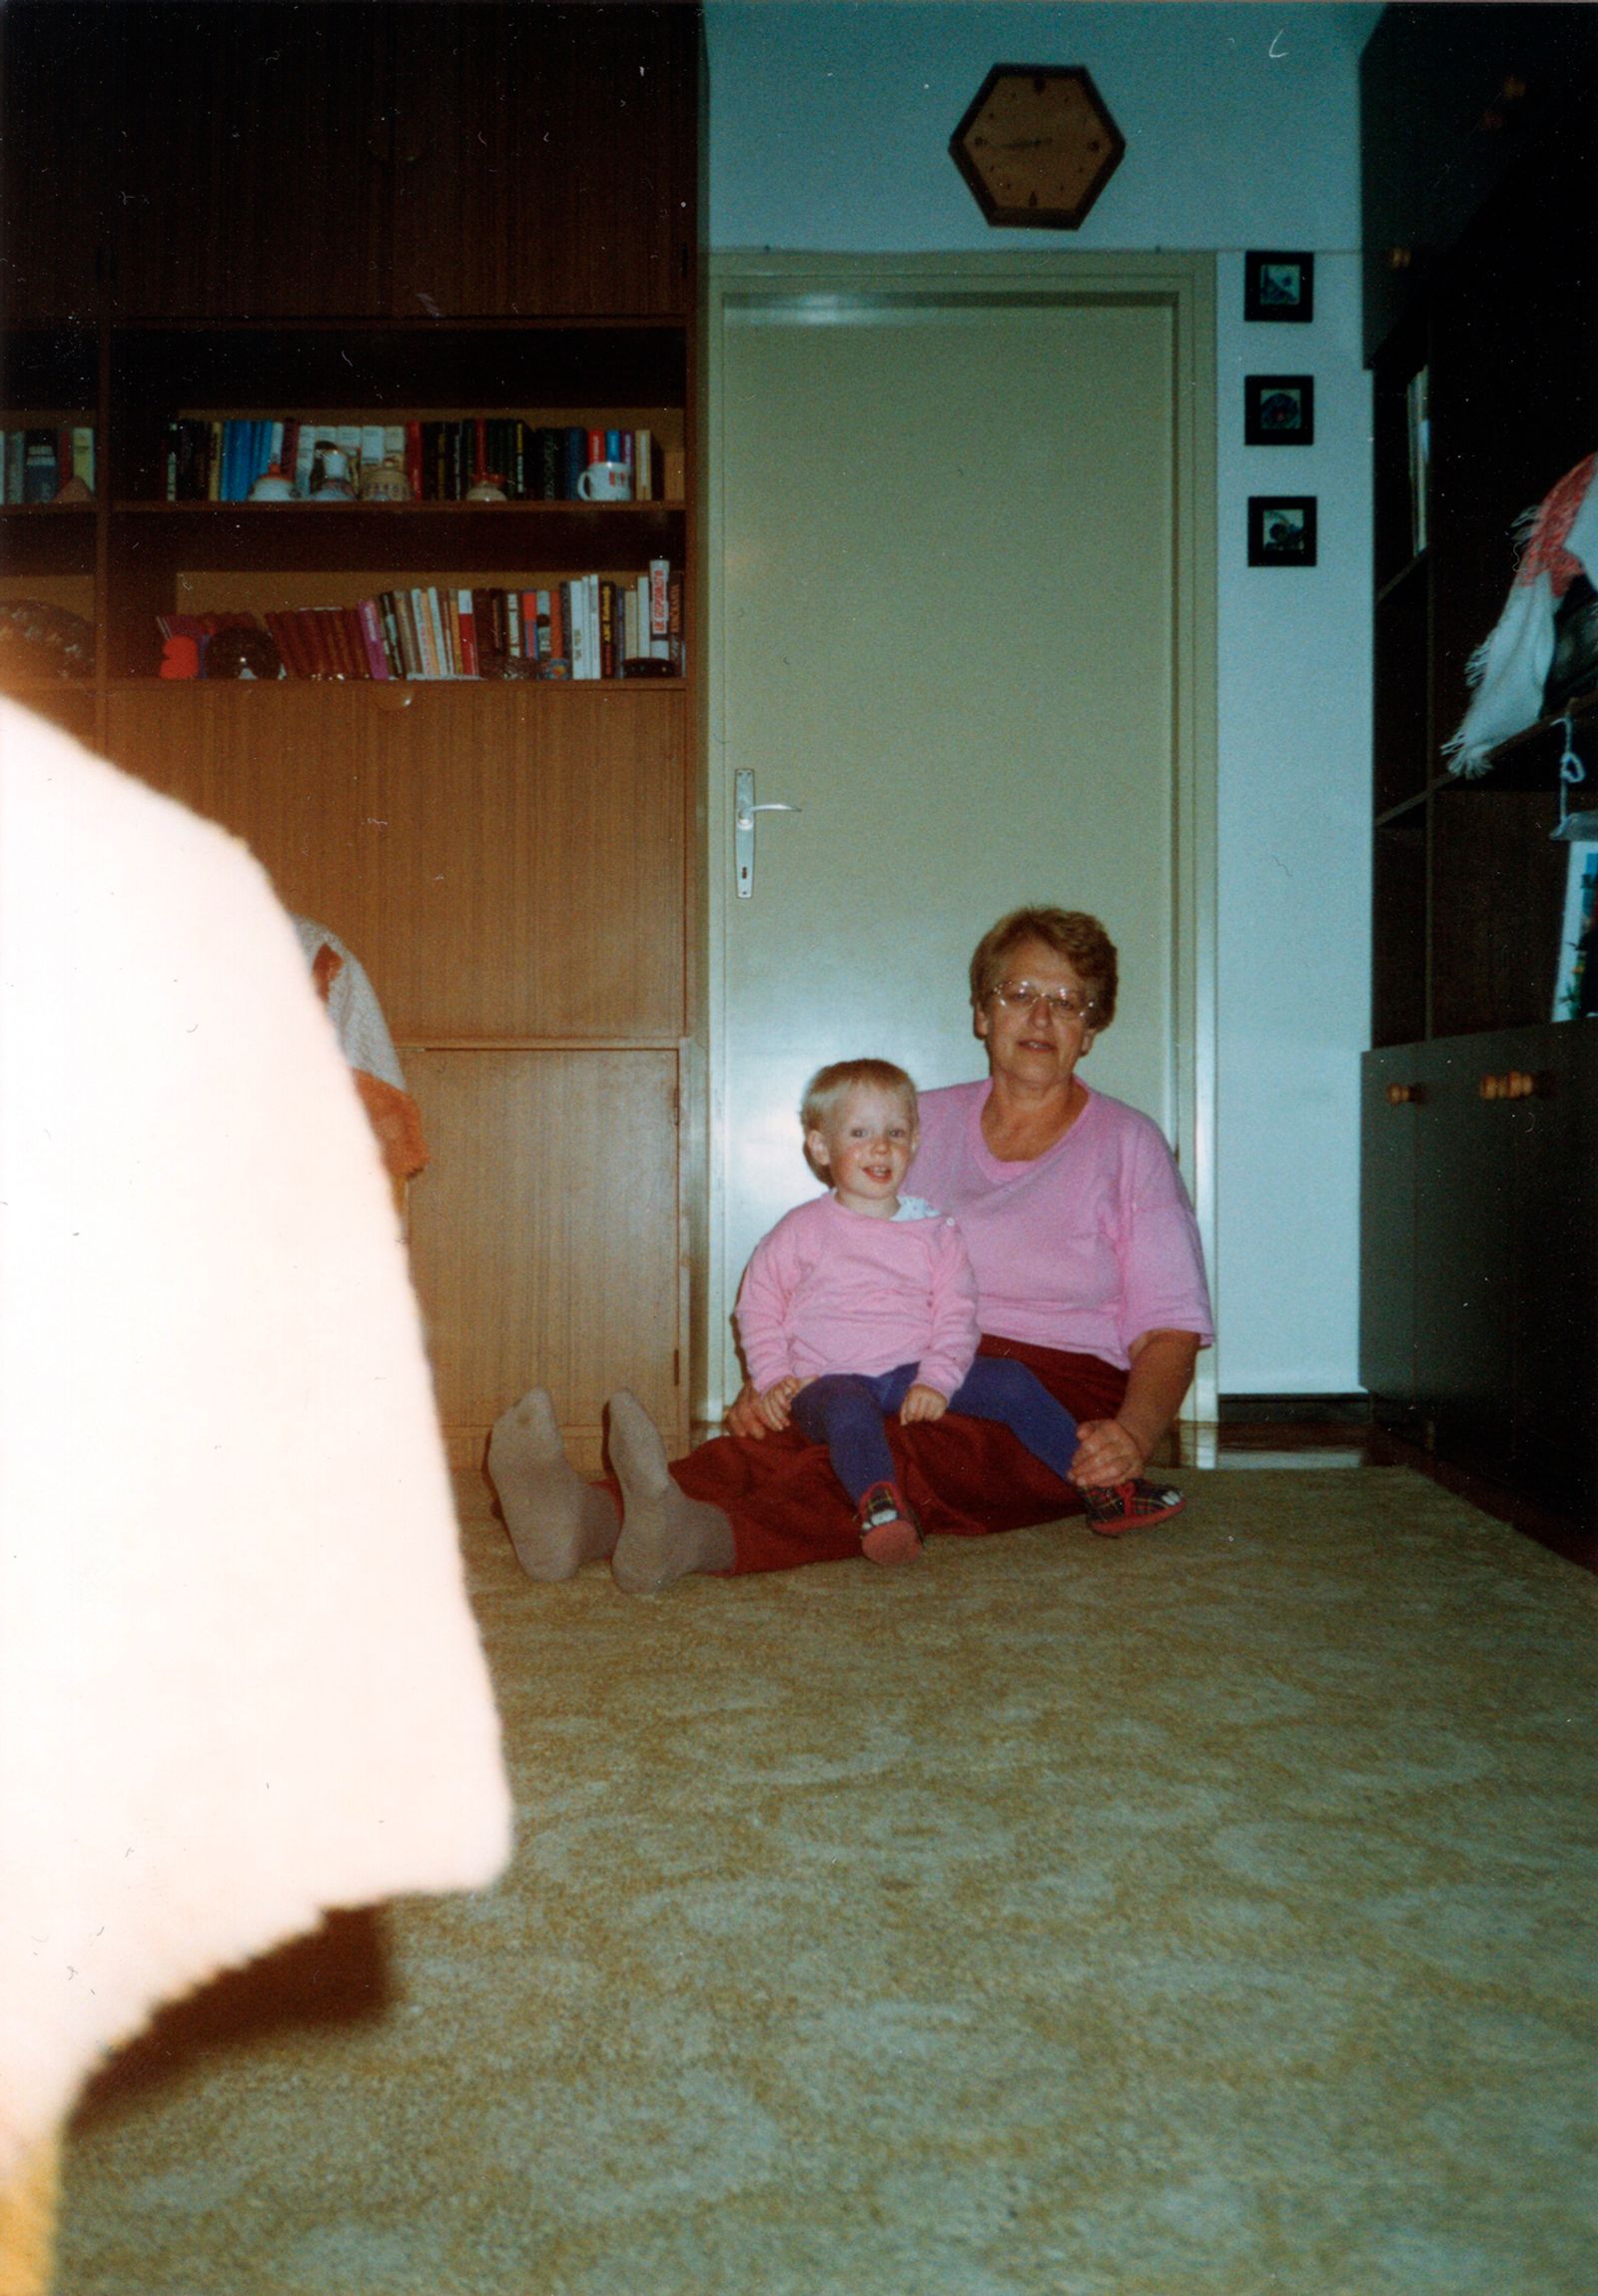 © Lucija Rosc - Me and my grandma in the living room (1998)